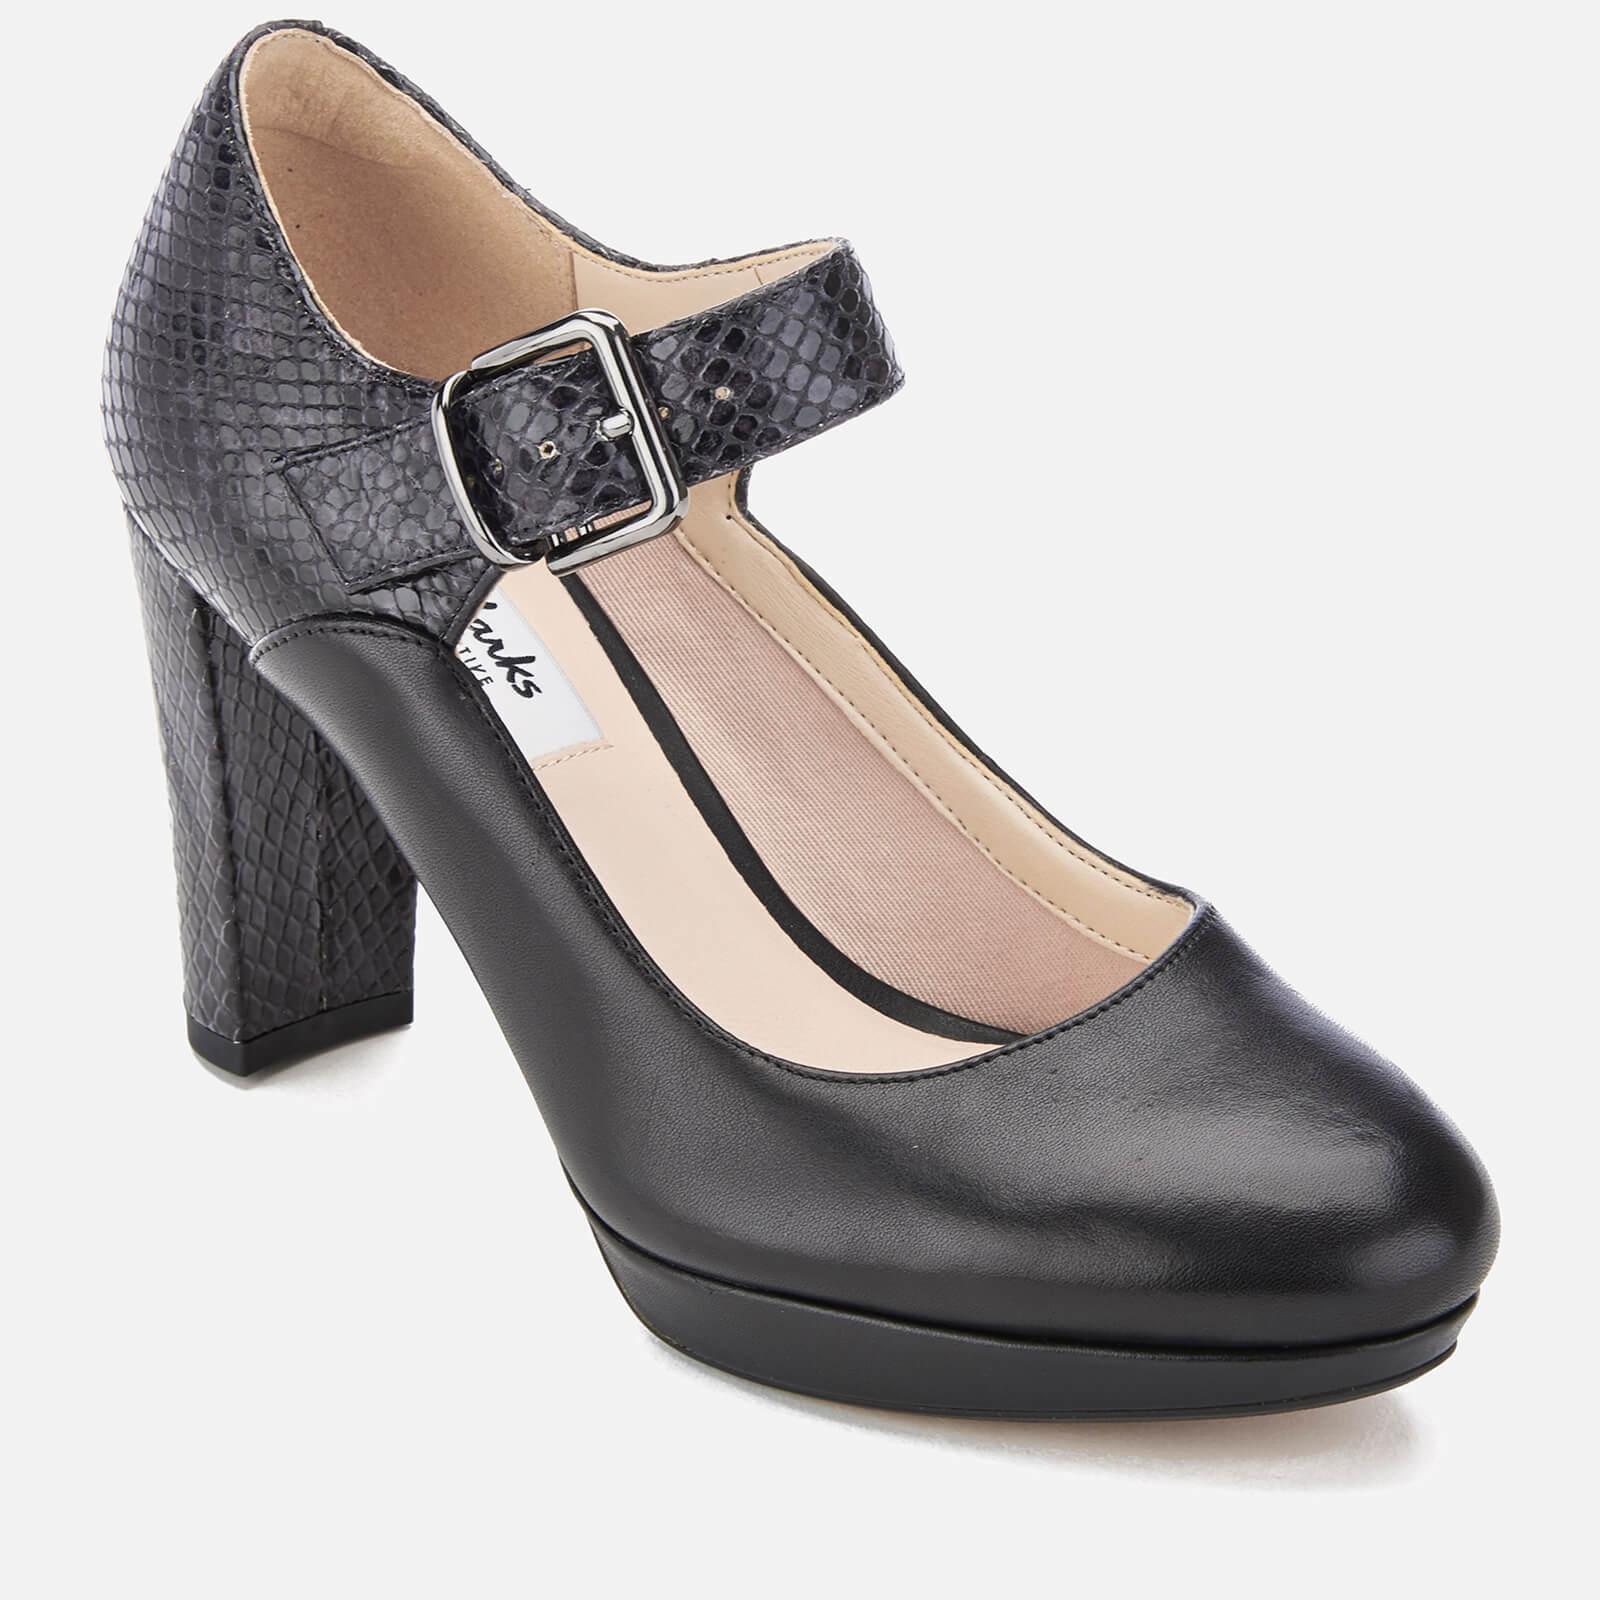 Clarks Kendra Gaby Leather Mary Jane Heels in Black | Lyst